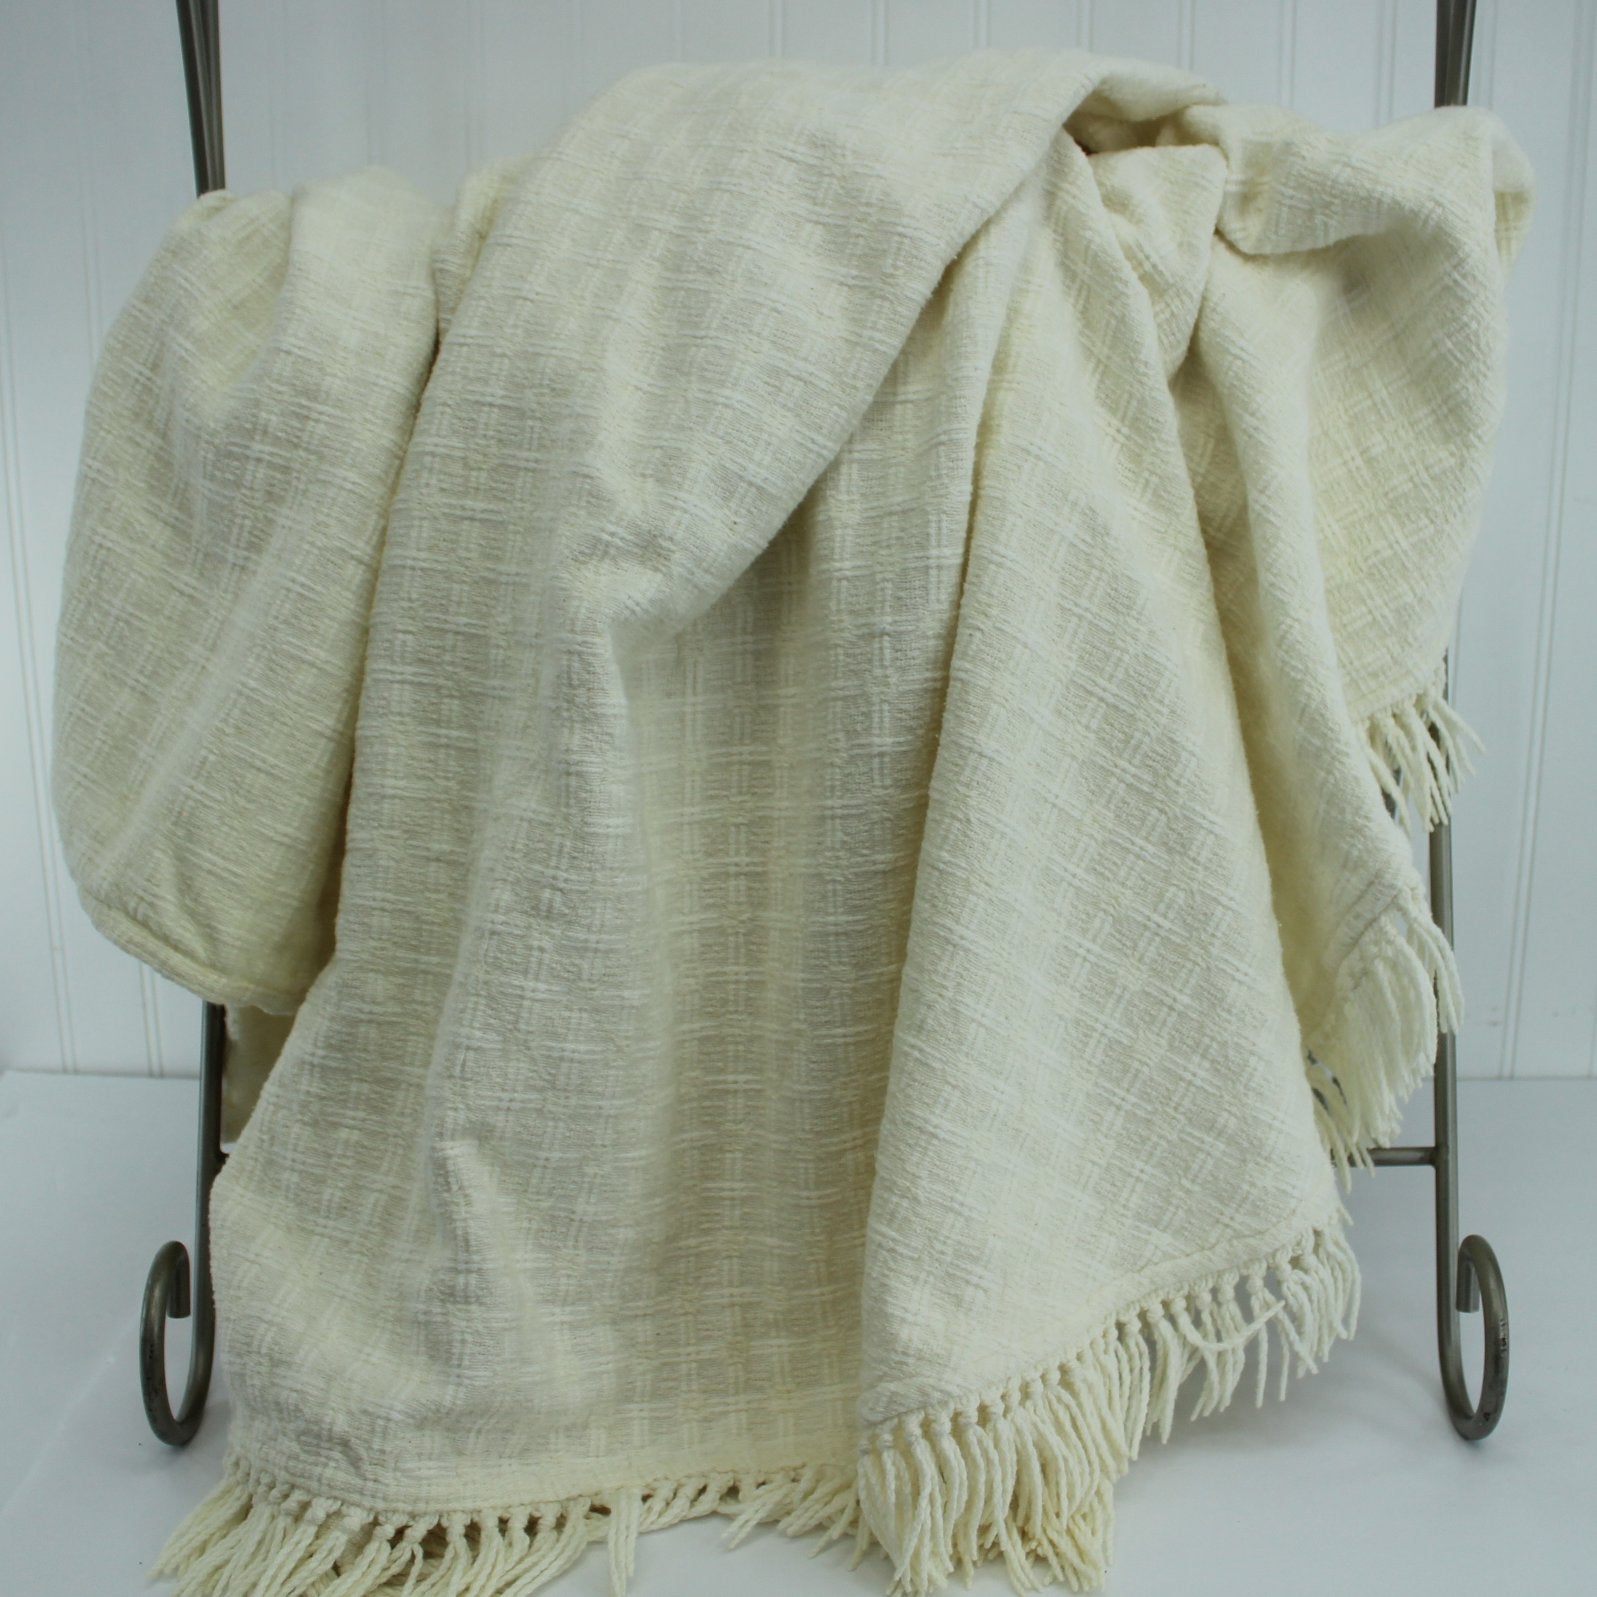 Woven Cotton Bedspread Off White Ivory Basket Weave Design